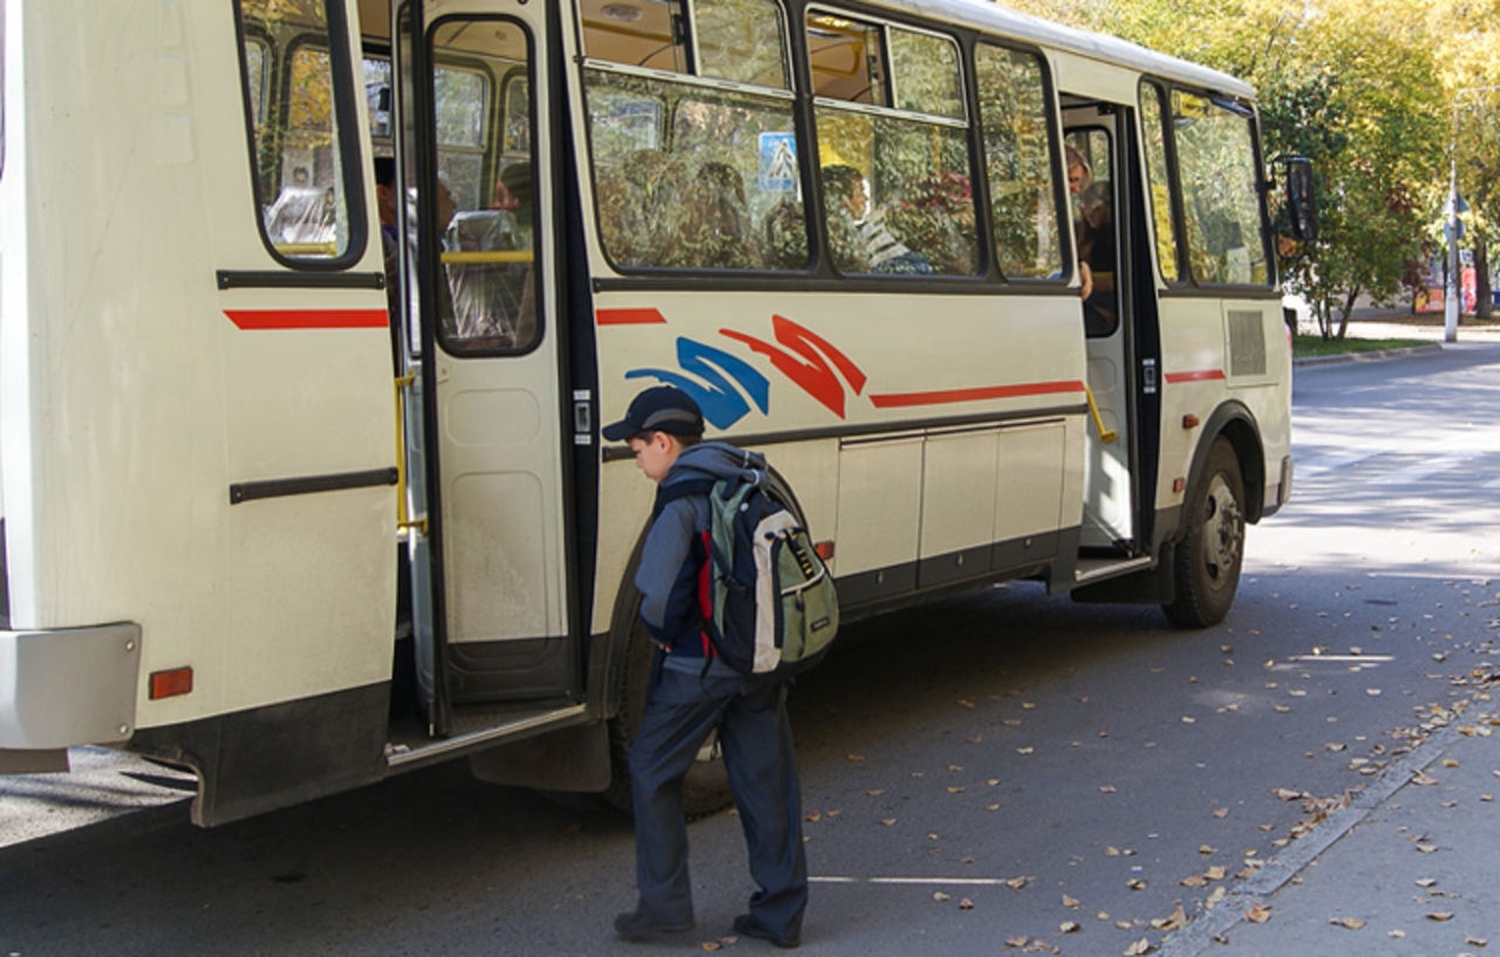 Высадка из автобуса. Школьника высадили из автобуса. Высадка детей из автобуса. Школьники садятся в автобус. Школьники в автобусе.